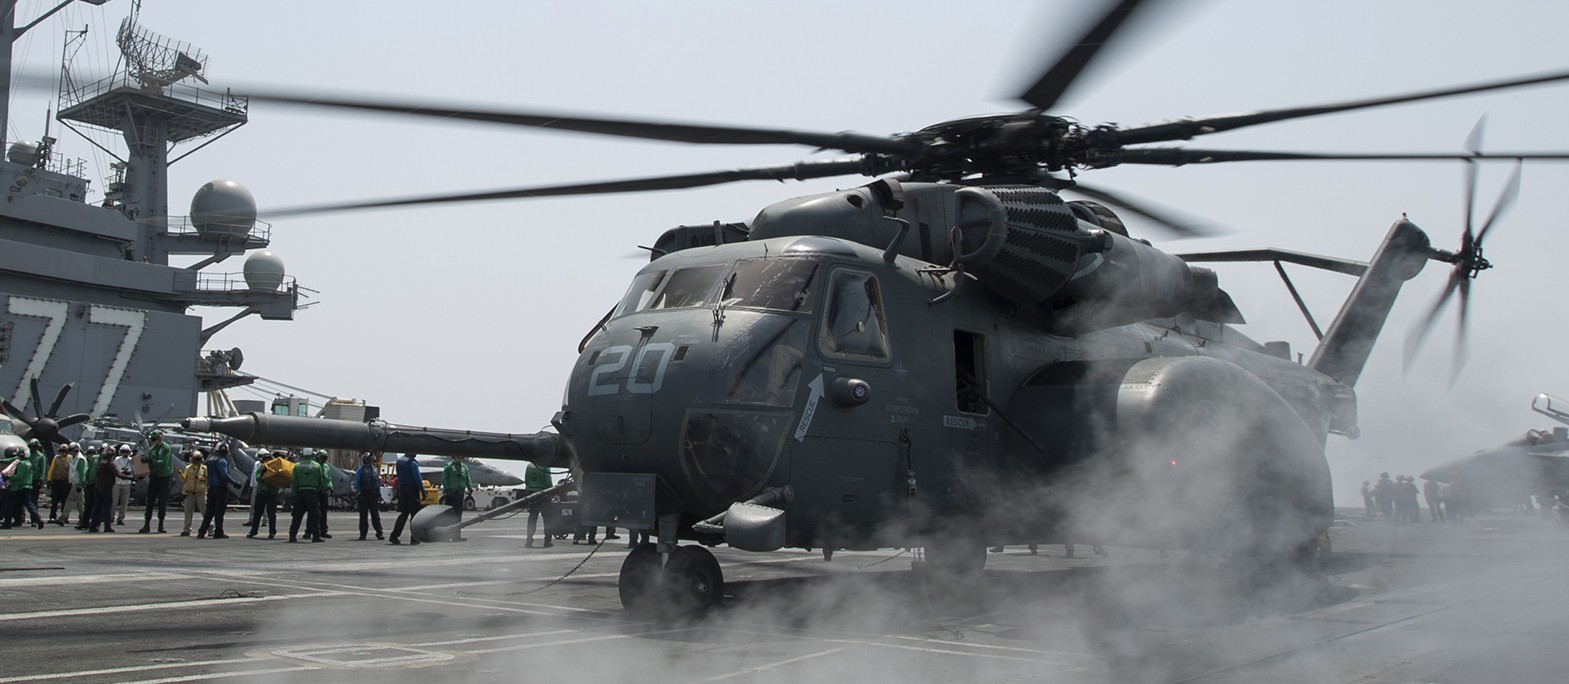 hm-15 blackhawks helicopter mine countermeasures squadron navy mh-53e sea dragon 26 uss george h. w. bush cvn-77